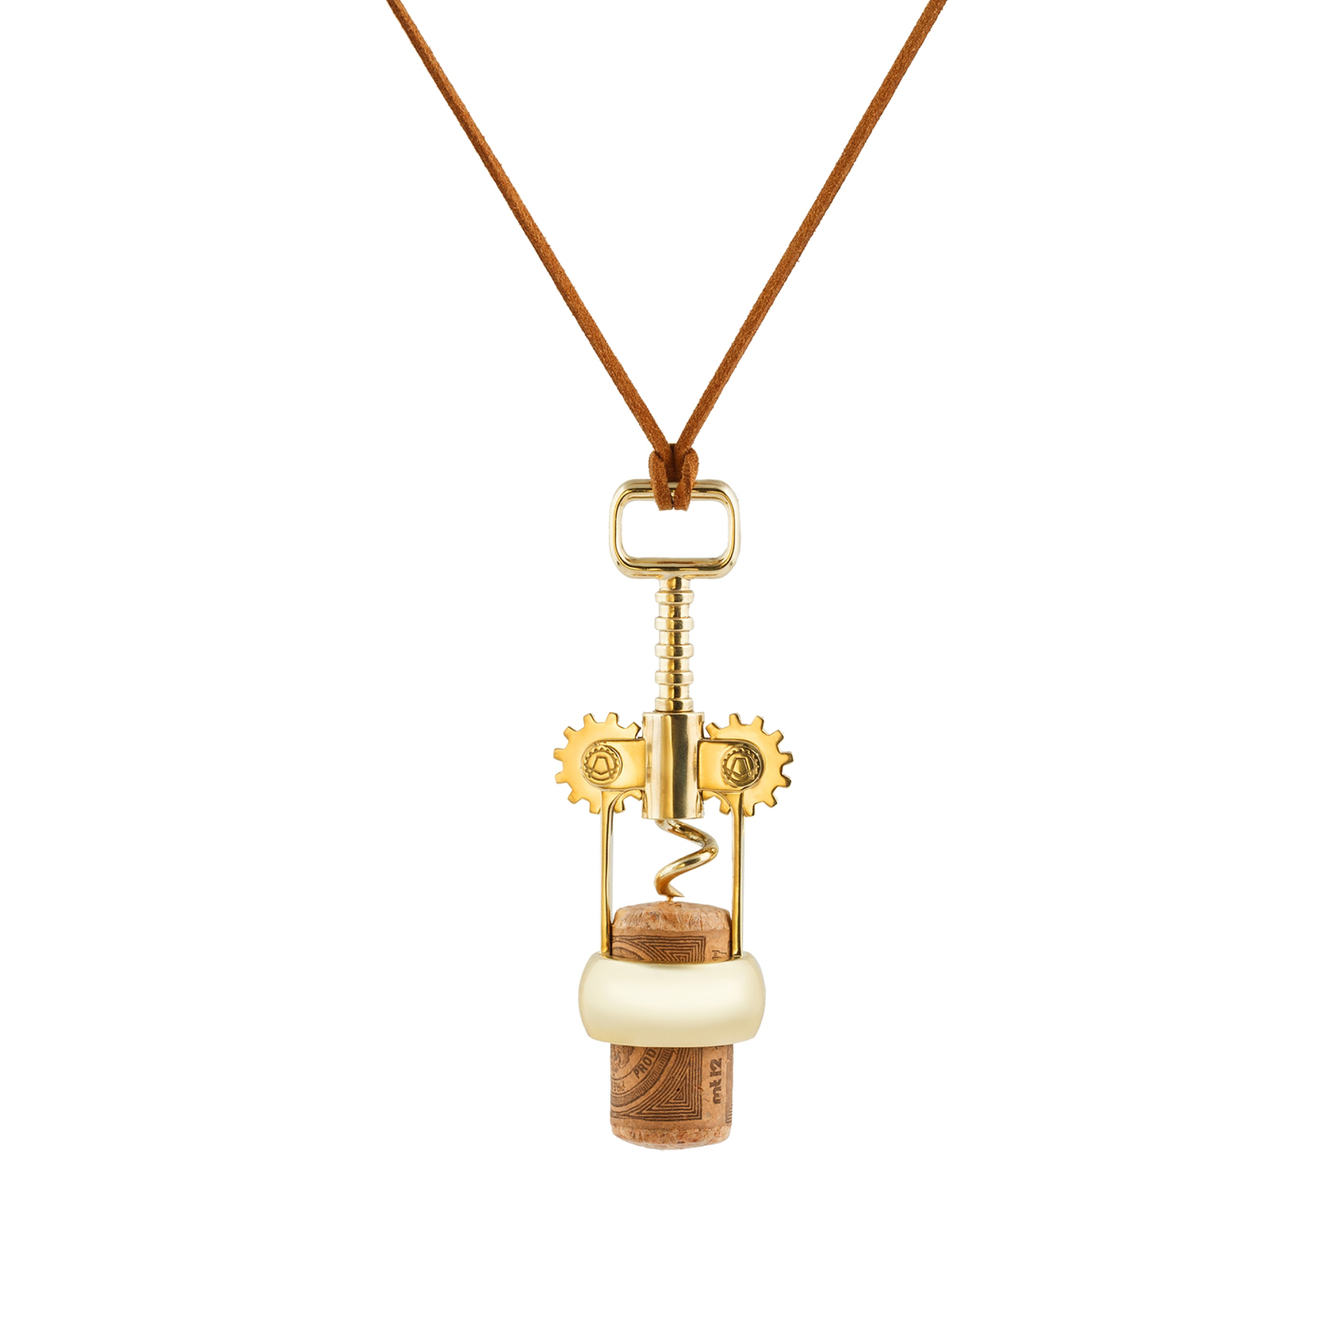 AMARIN Jewelry Позолоченная подвеска CORK Штопор штопор цыганский для хрупких пробок cork puller 119 945 00 pulltex